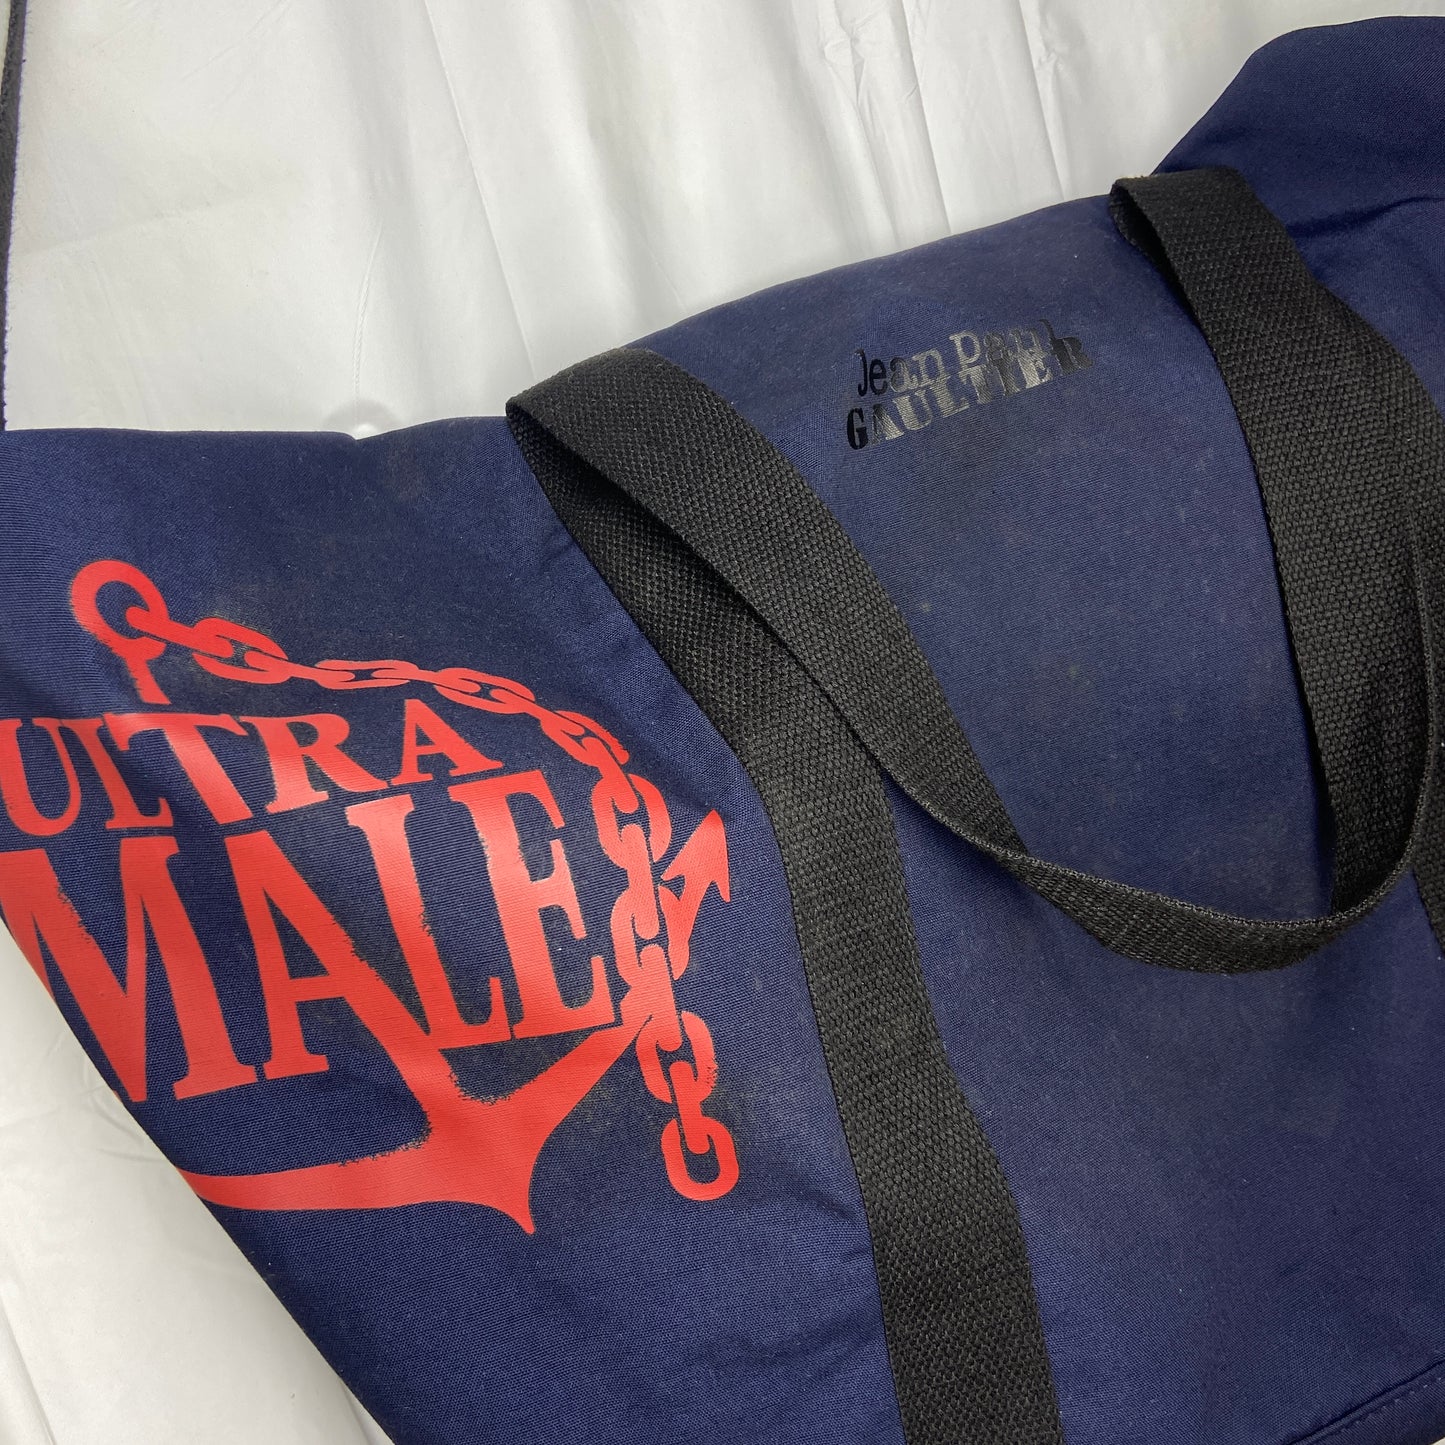 Jean Paul Gaultier Ultra Male print gym bag